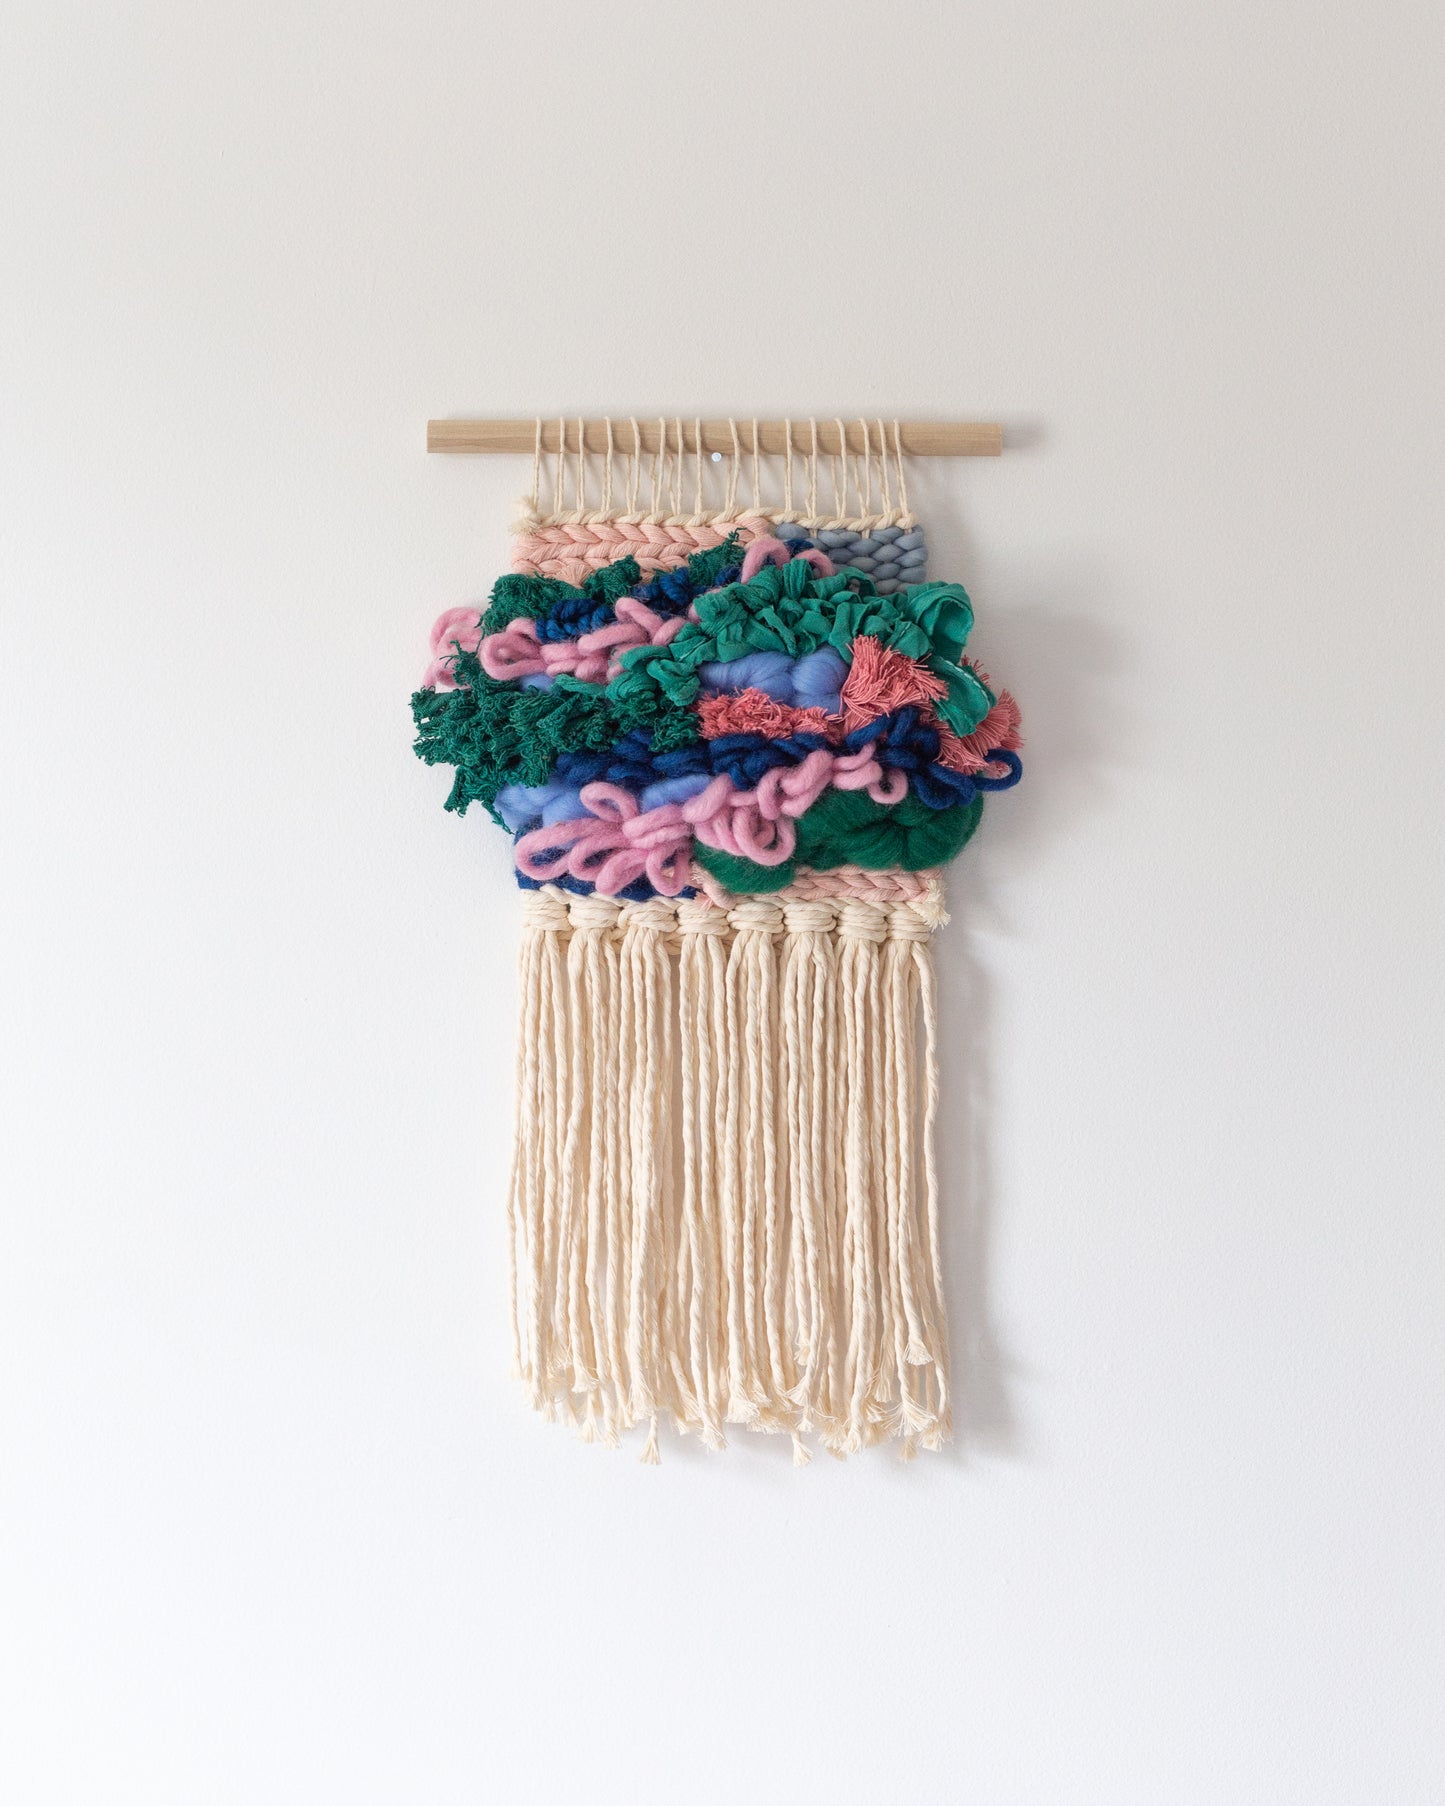 Weaving #7 | Woven Wall Hanging